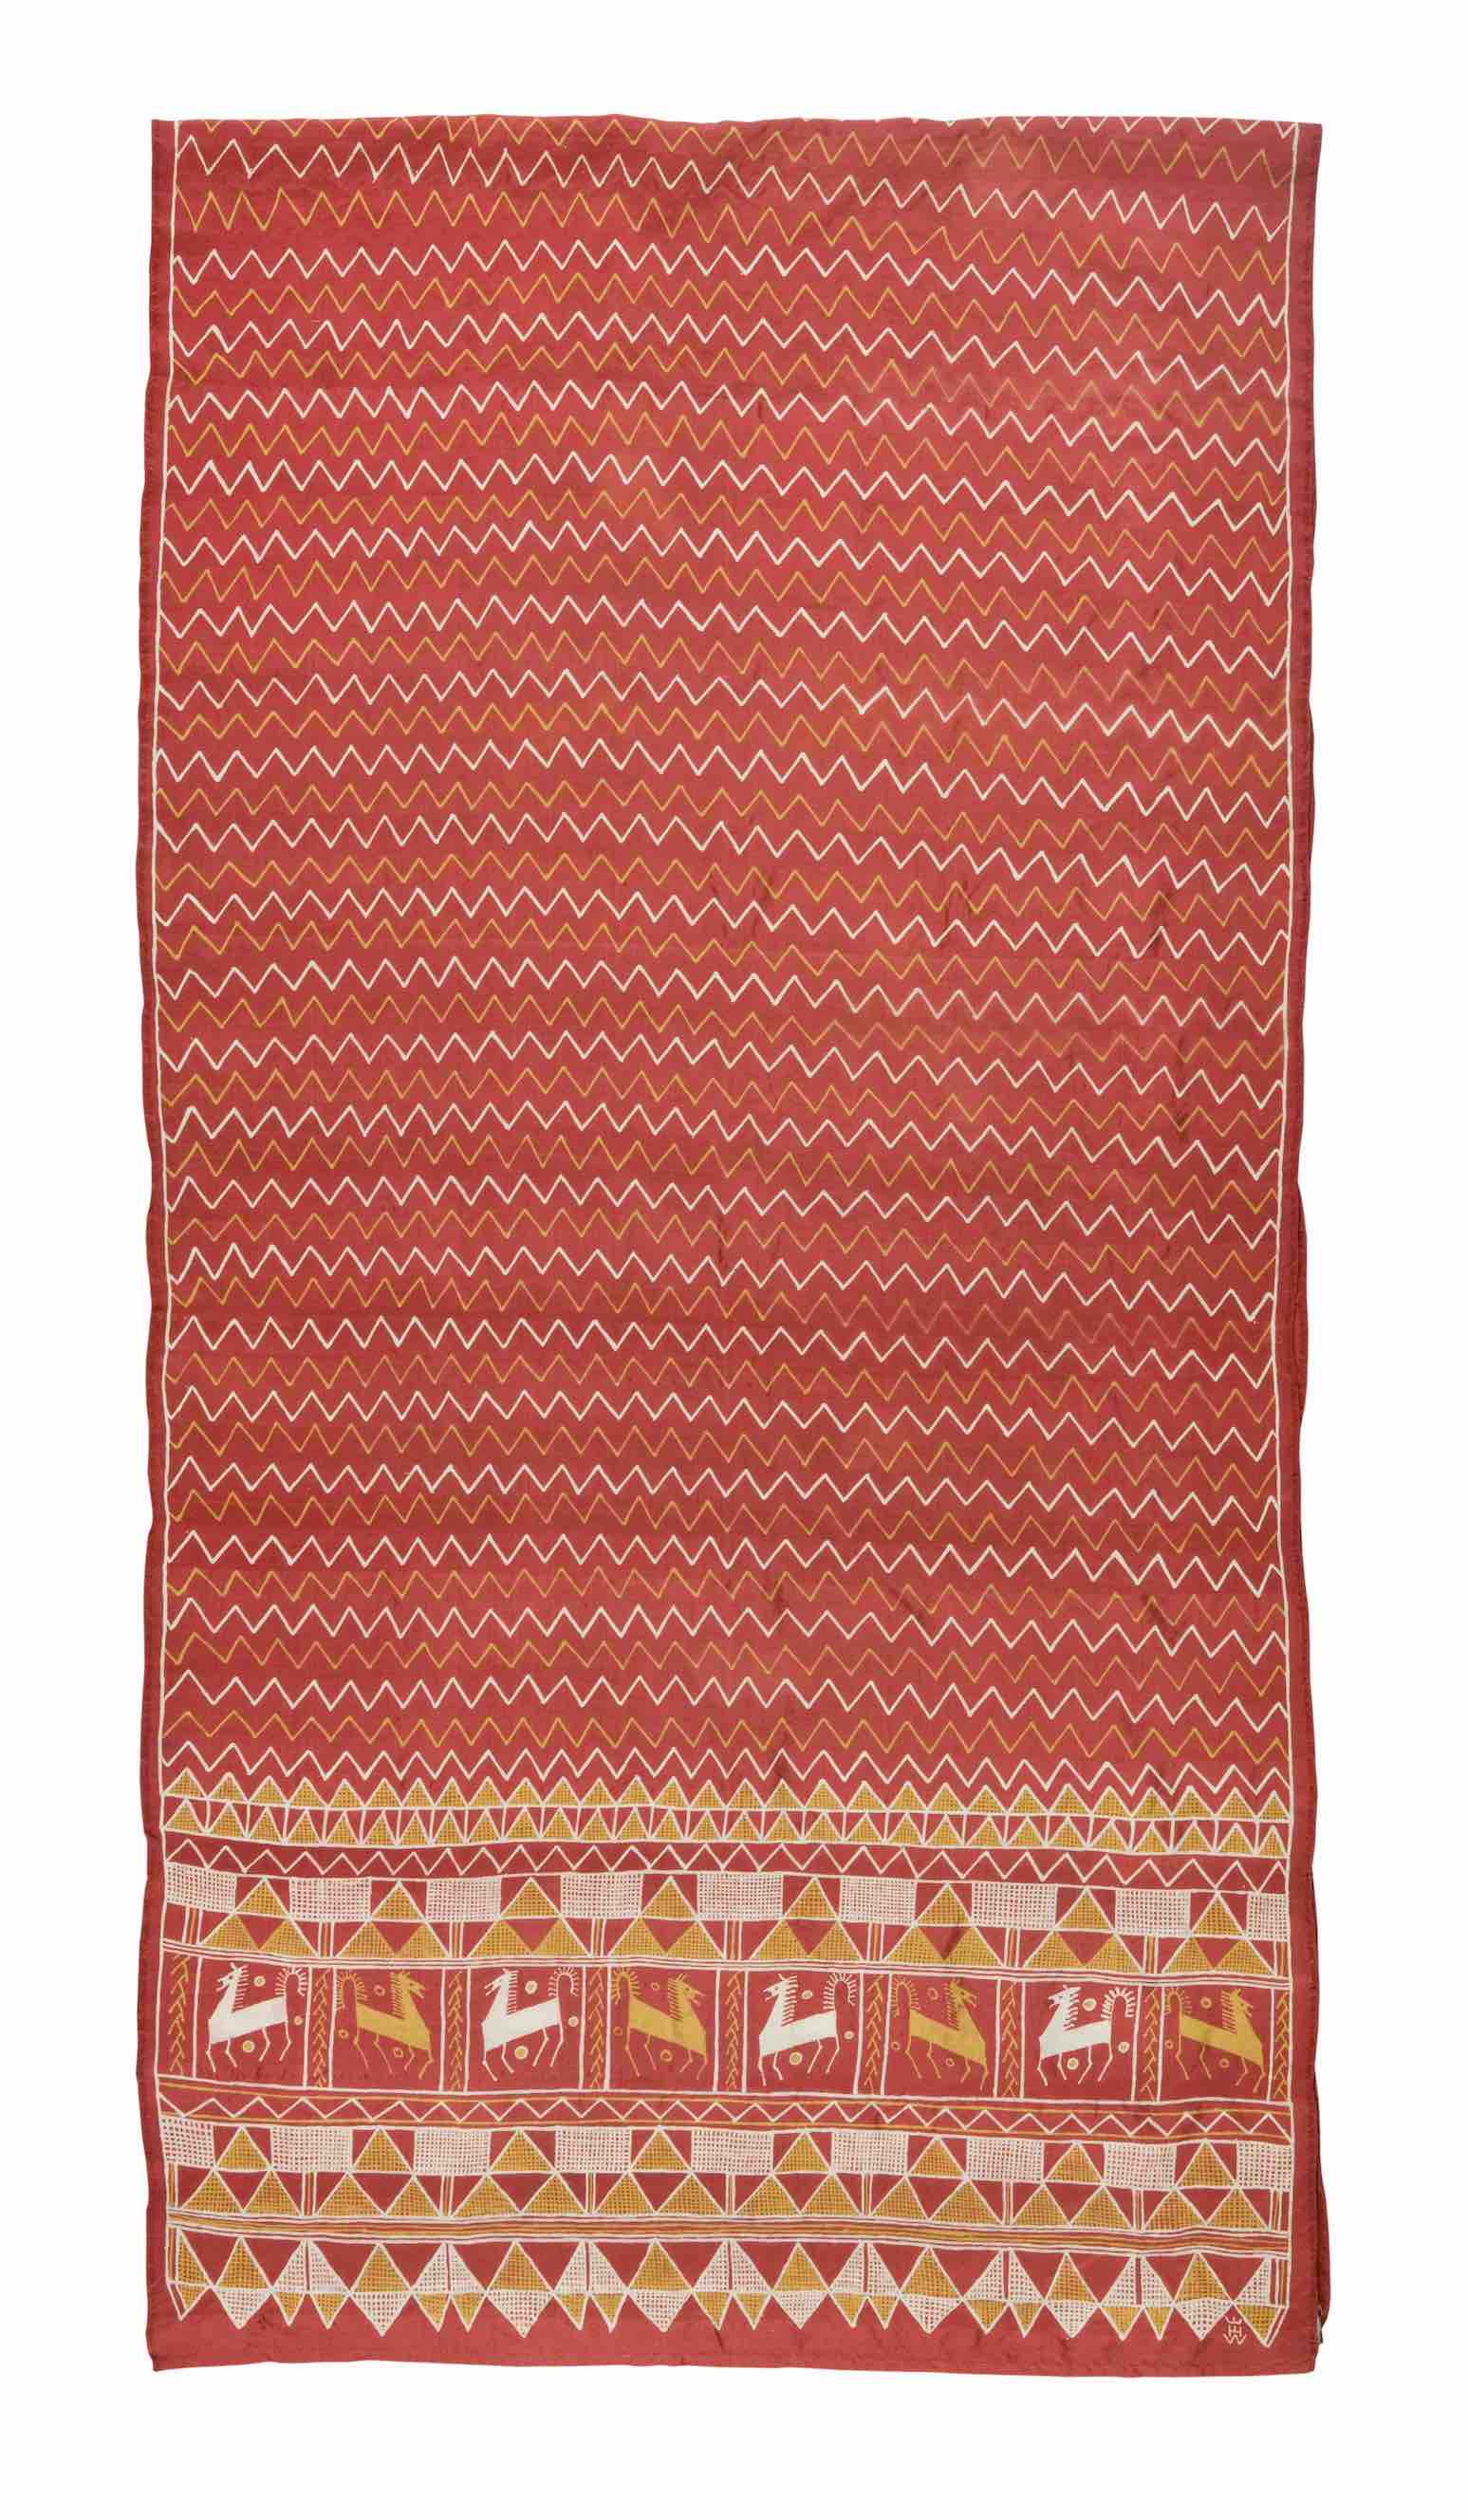 Batik scarf. Image: Norbert Okołowicz/ National Museum in Kraków